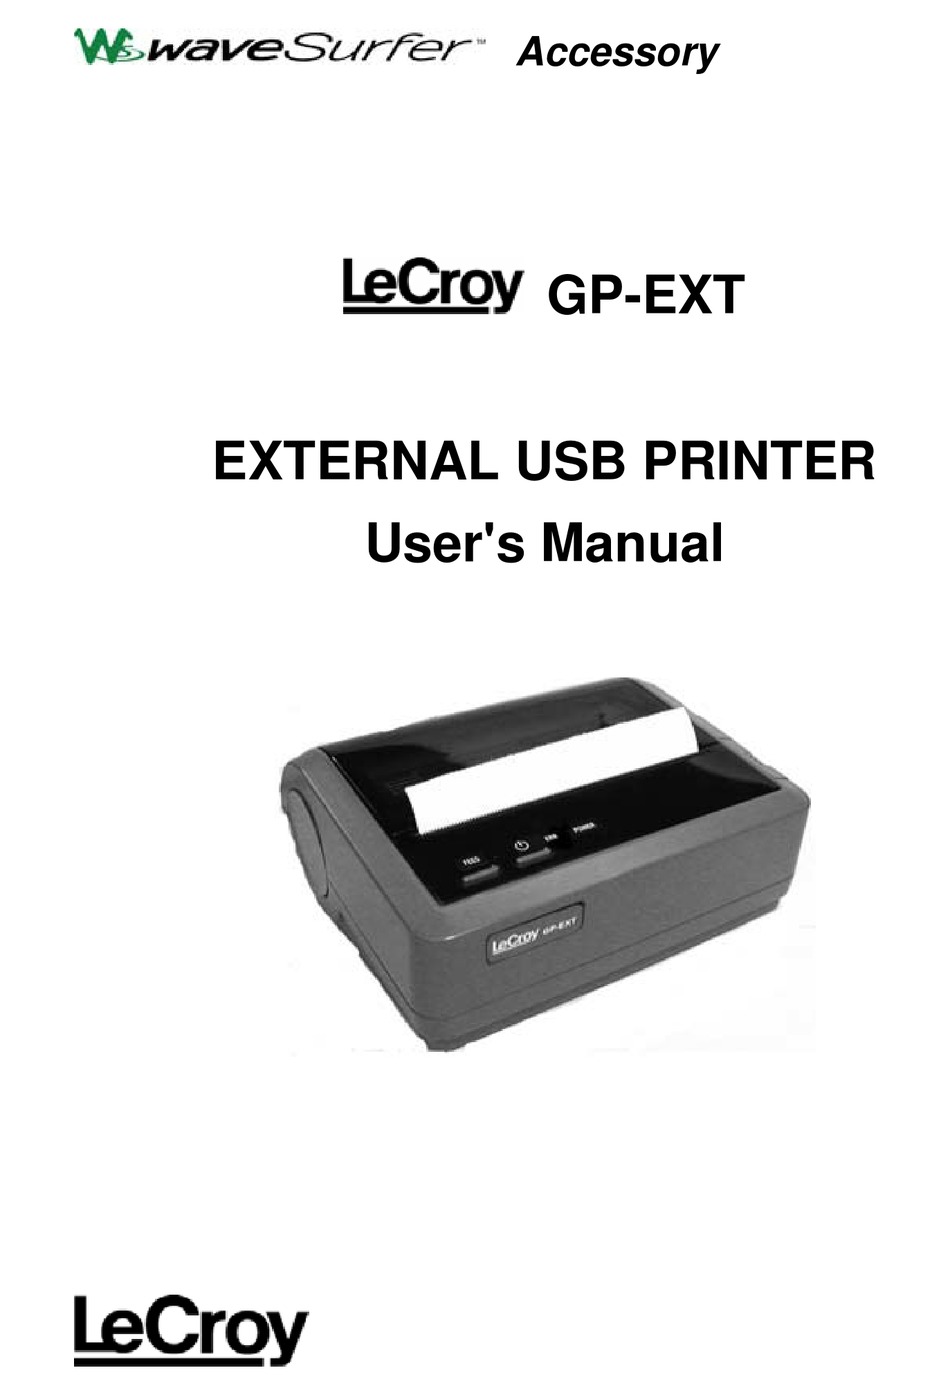 lecroy wavesurfer 44xs service manual